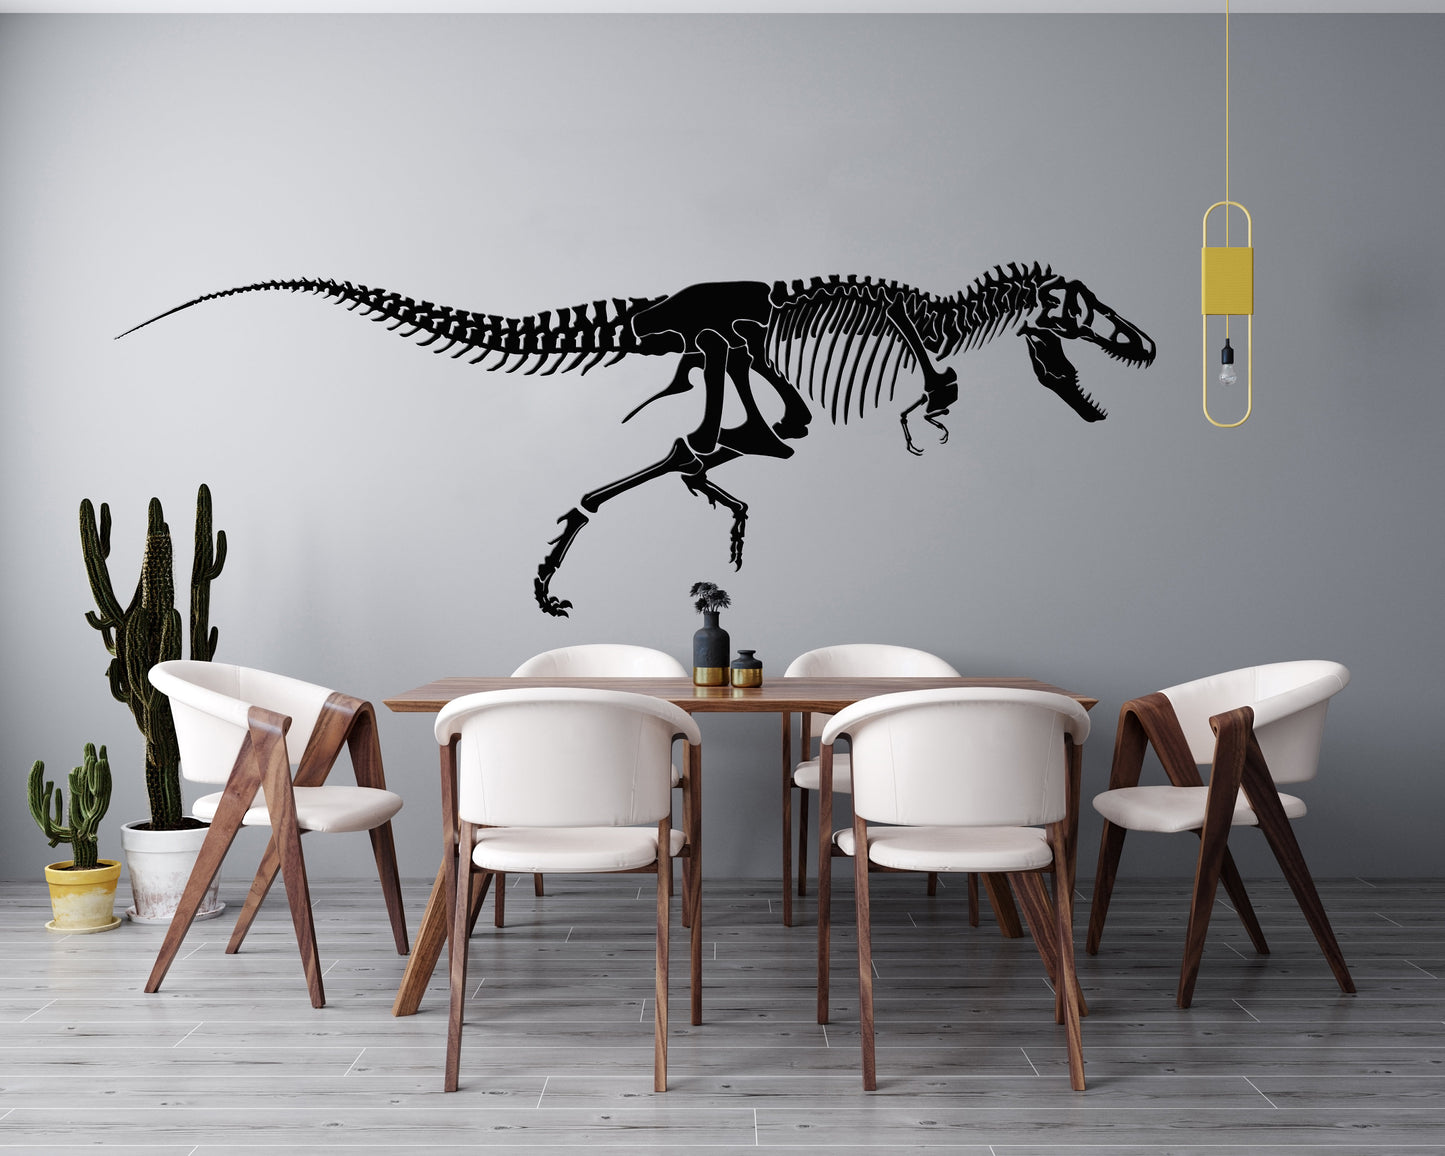 Wooden wall home decor, wooden Dinosaur T-rex skeleton art decor, living room bedroom nursery decor, fossil rustic morden decor